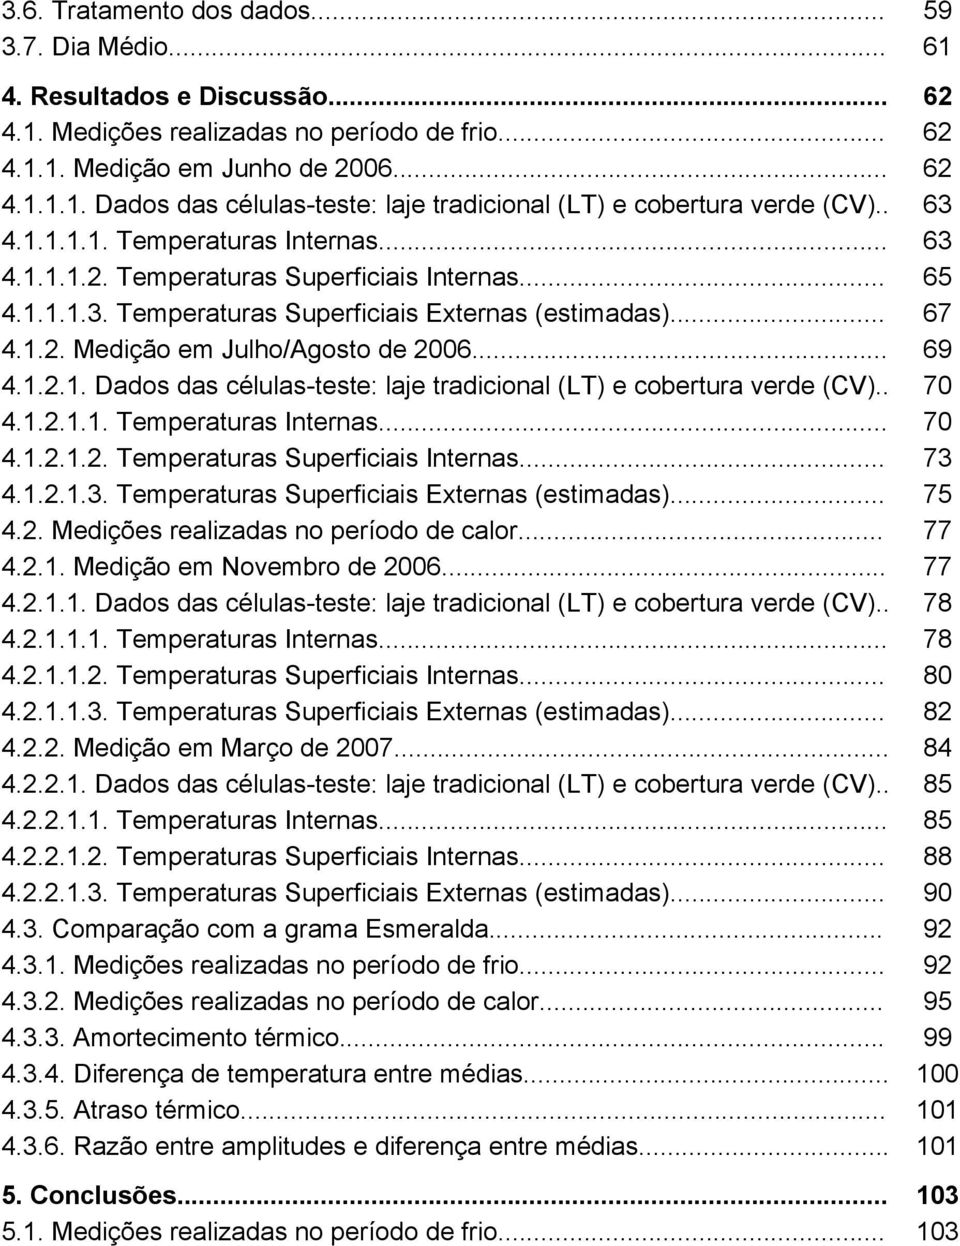 .. 69 4.1.2.1. Dados das células-teste: laje tradicional (LT) e cobertura verde (CV).. 70 4.1.2.1.1. Temperaturas Internas... 70 4.1.2.1.2. Temperaturas Superficiais Internas... 73 